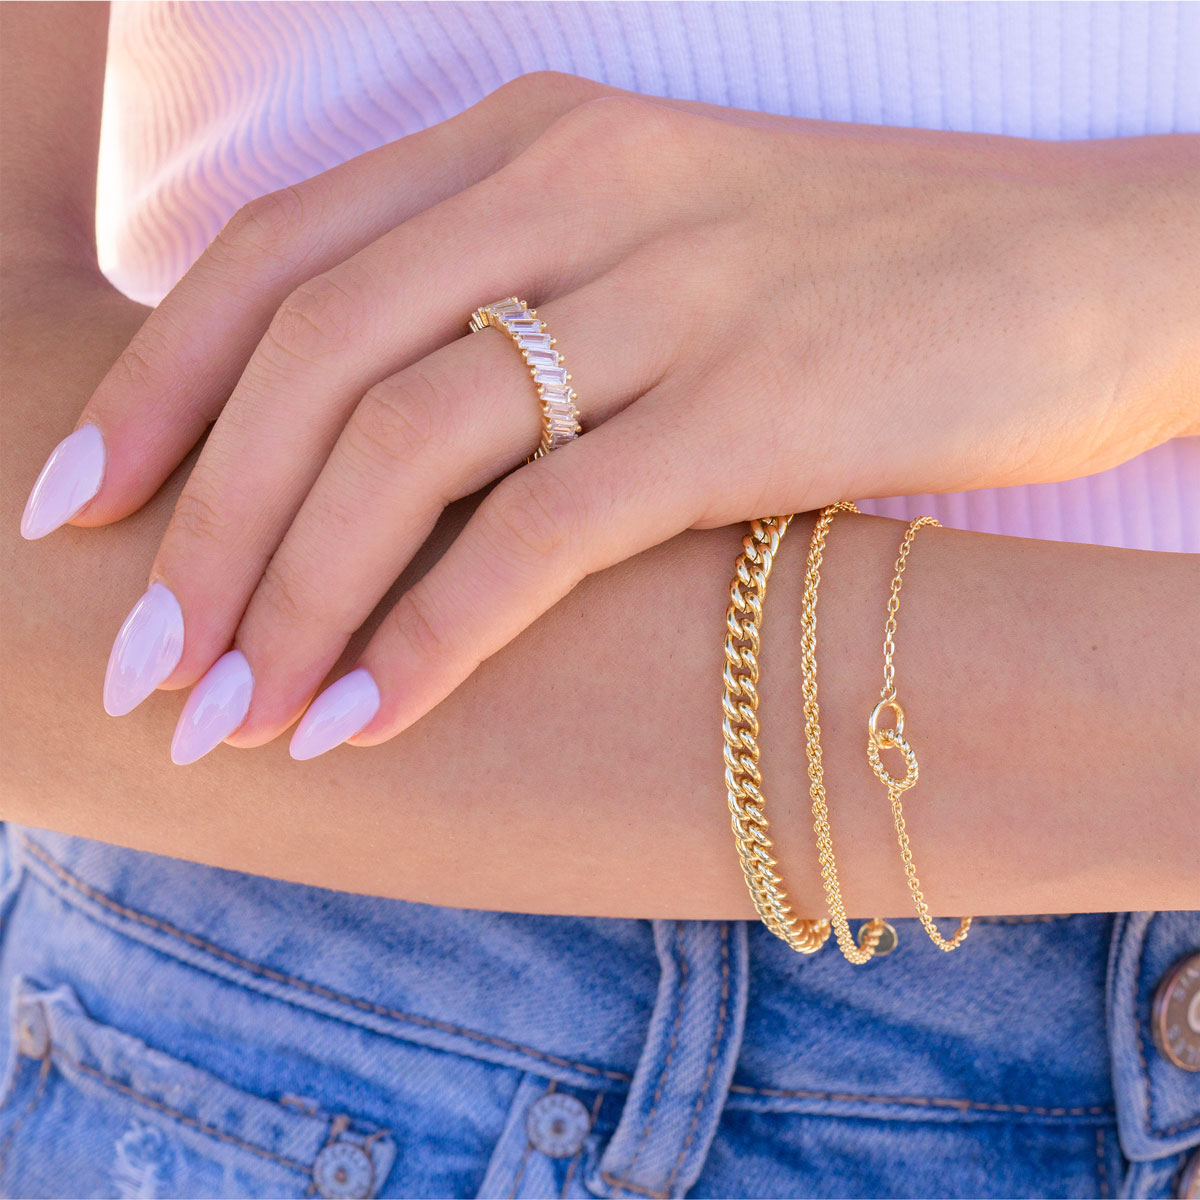 Beautiful gold bracelet stack on model